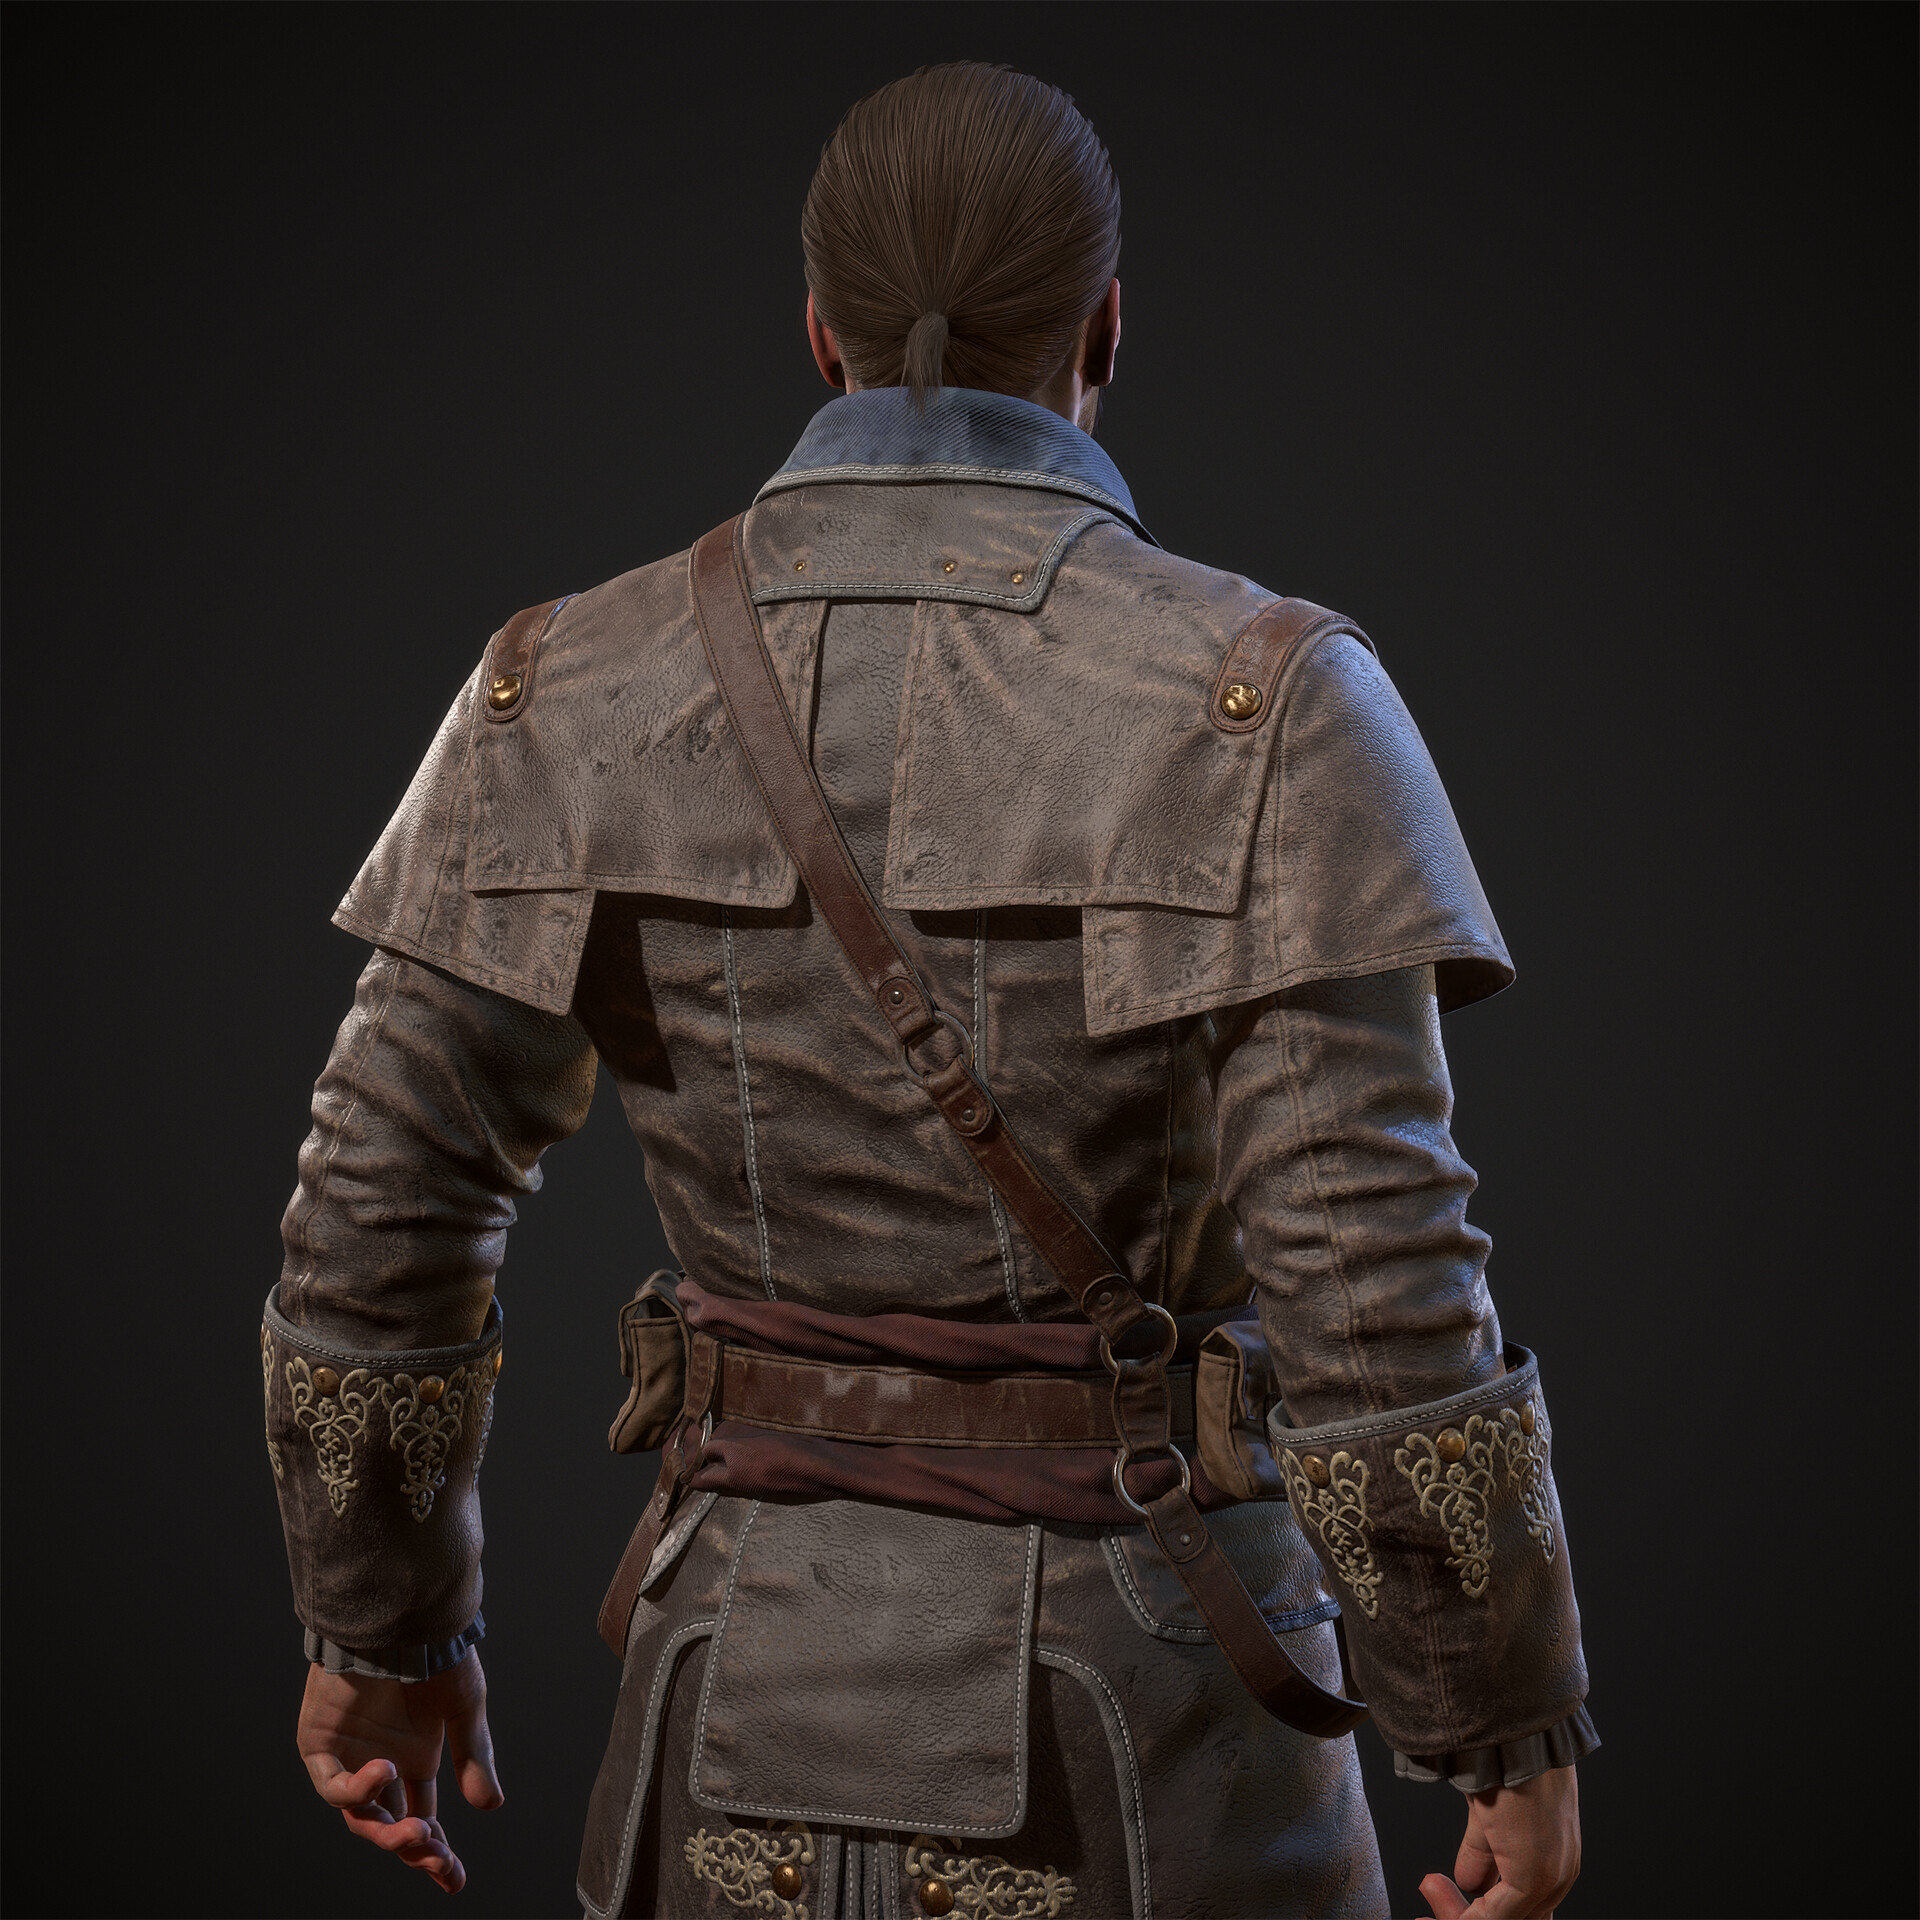 ArtStation - Assassin's Creed Rogue : The Renegade